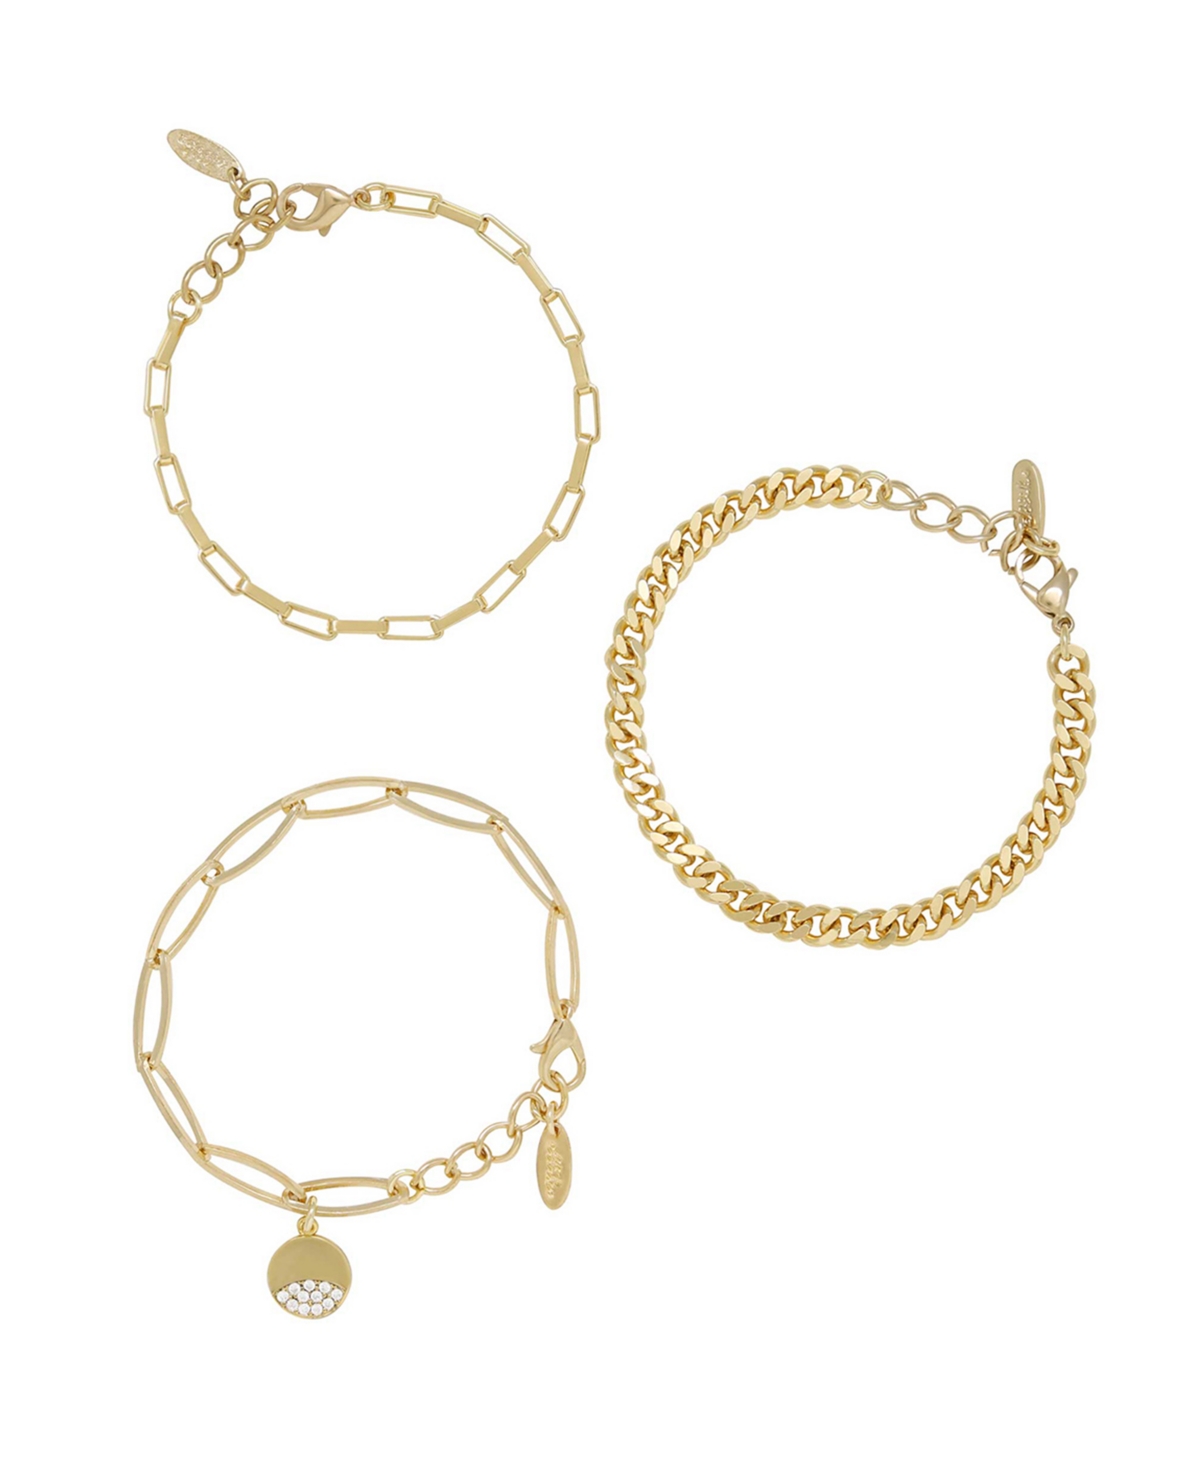 Ettika 18K Gold Plated Power of Three Bracelet Set, 3 Pieces